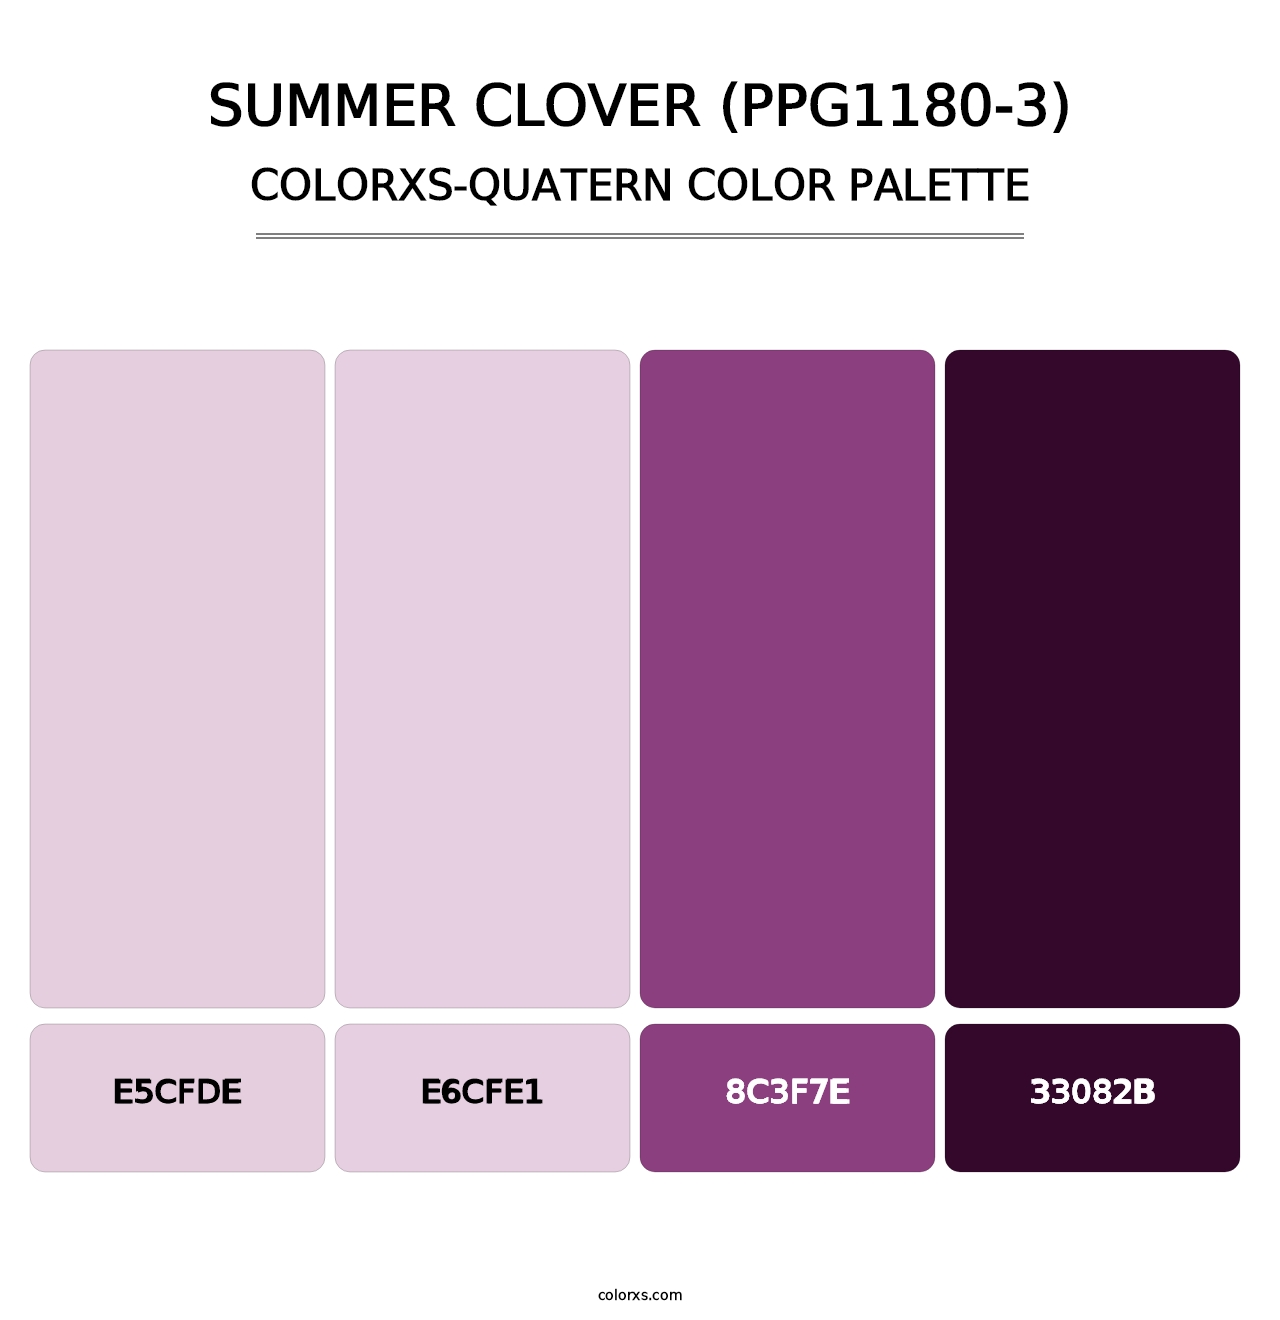 Summer Clover (PPG1180-3) - Colorxs Quatern Palette